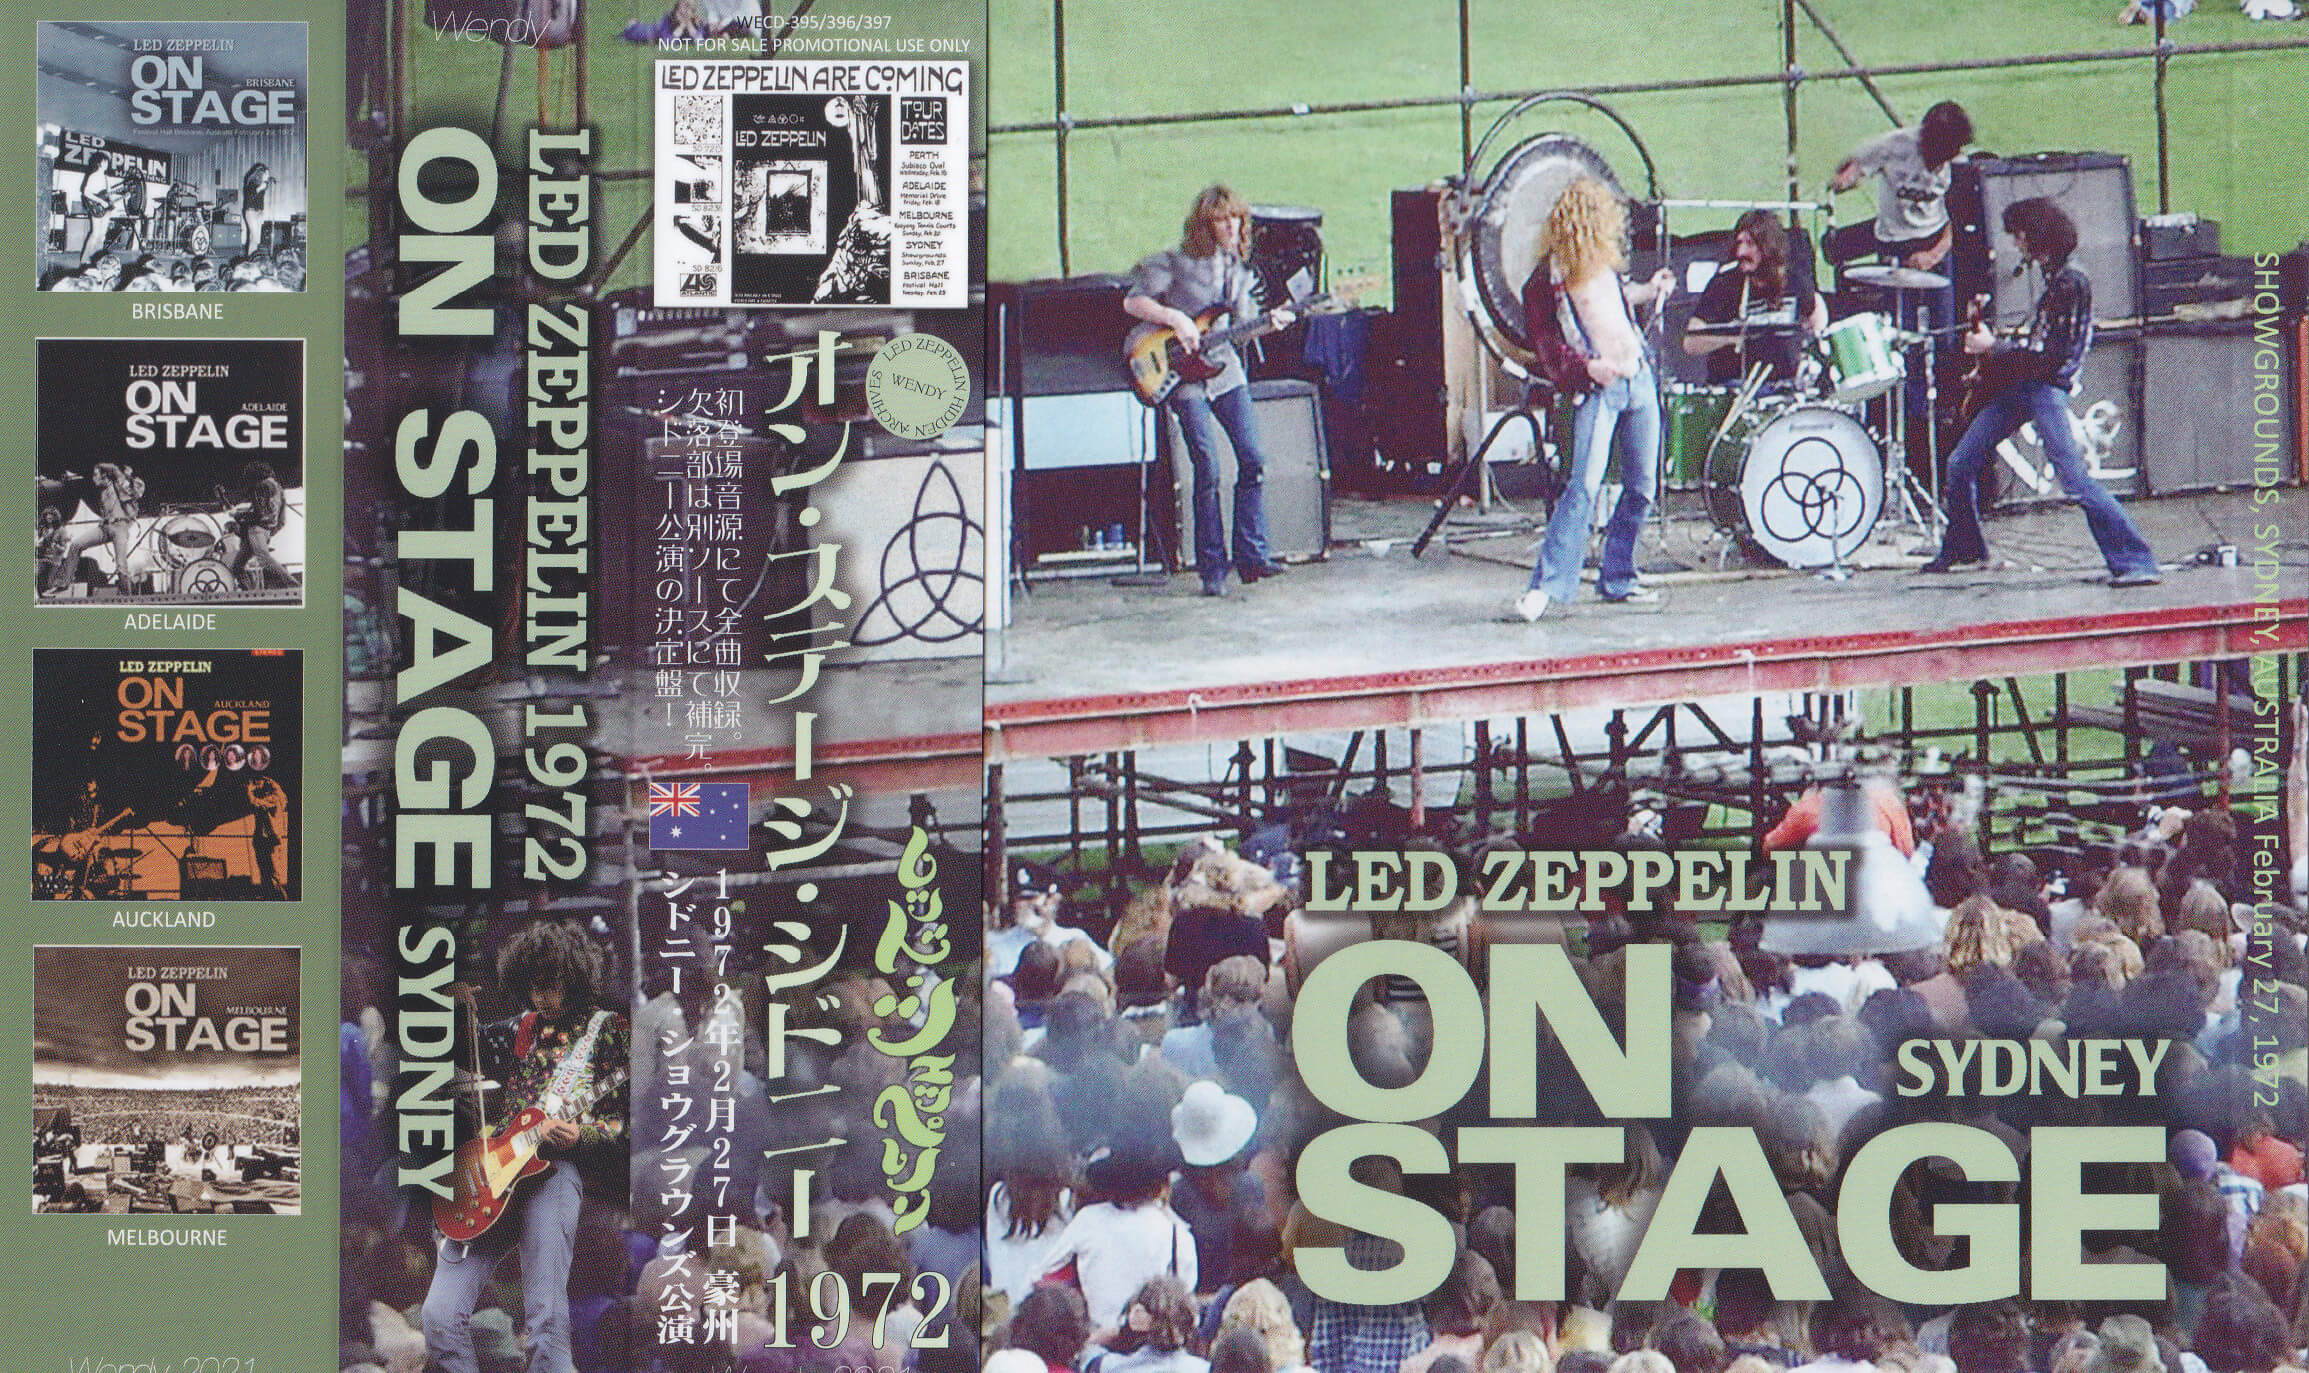 LED ZEPPELIN 1972 ON STAGE SYDNEY 3CD